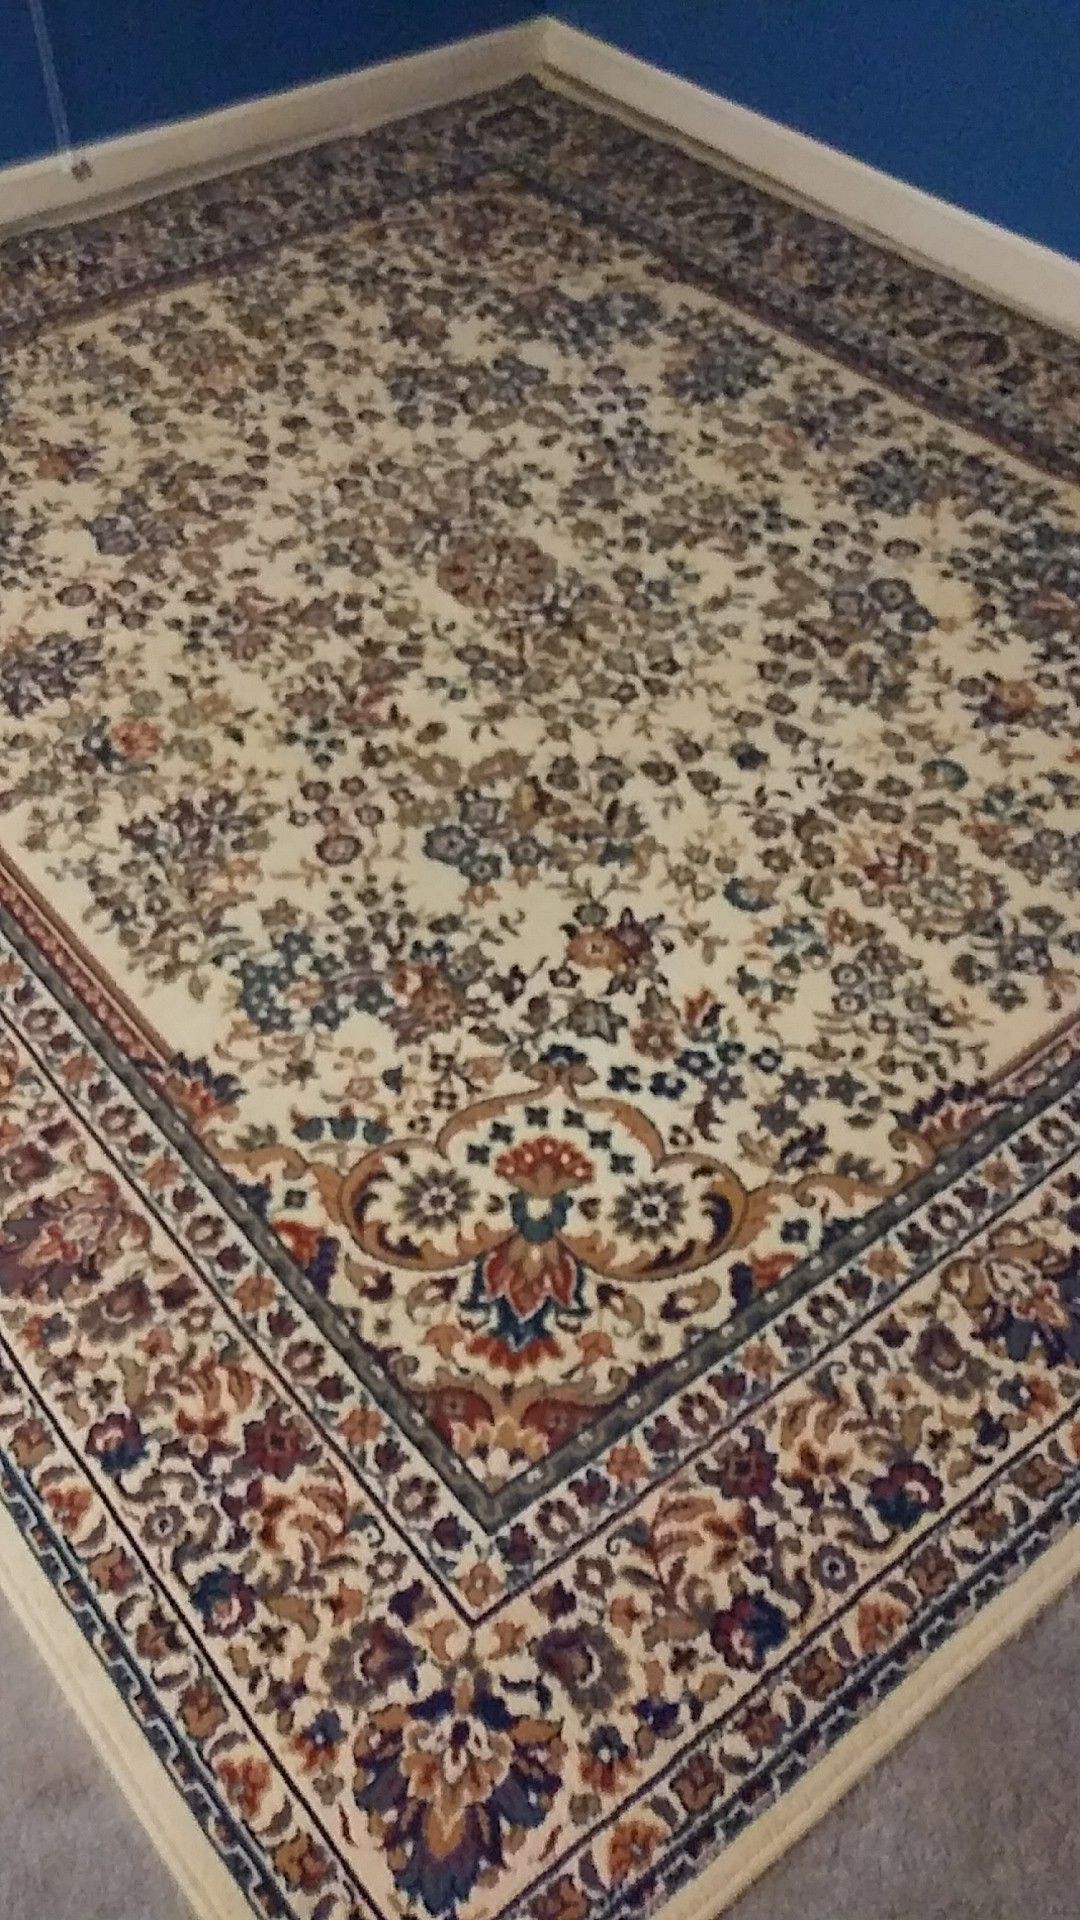 Large area rug